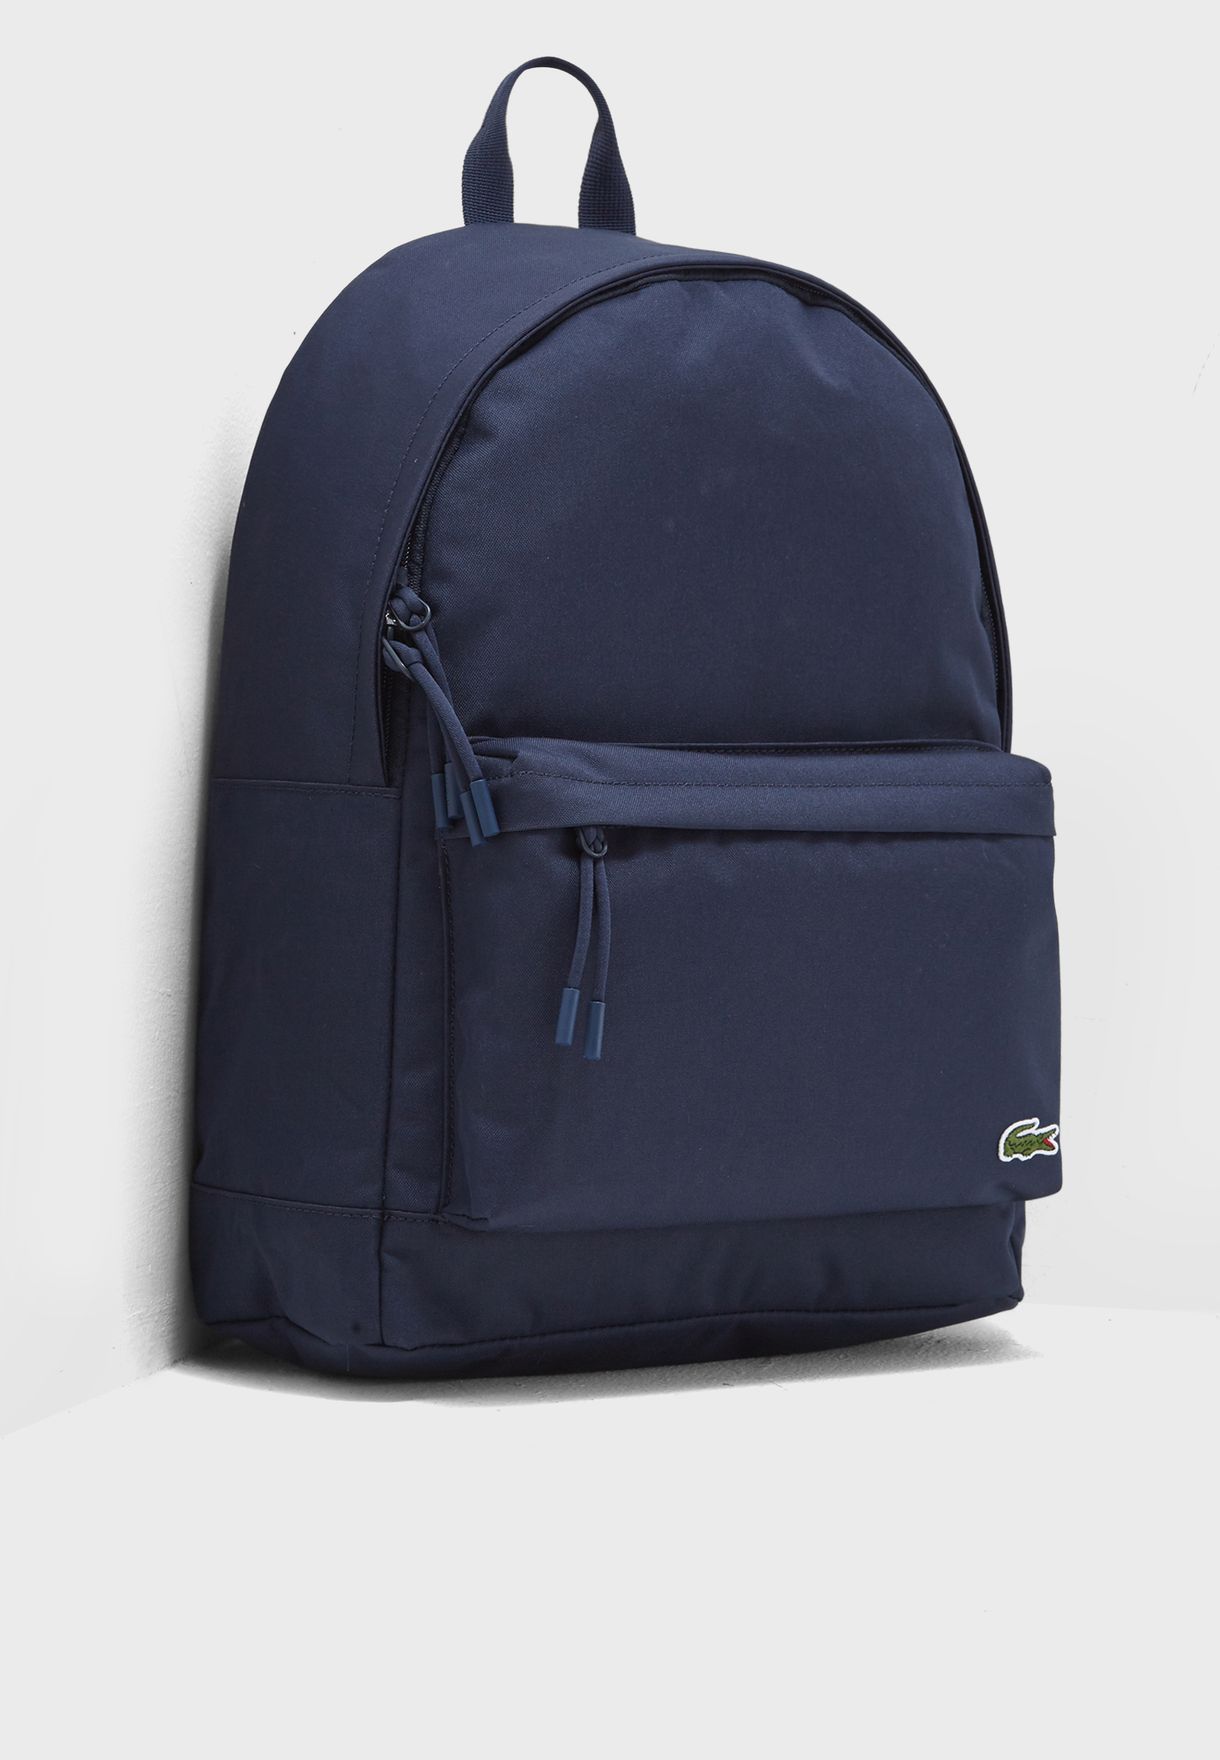 Zip Closure Backpack